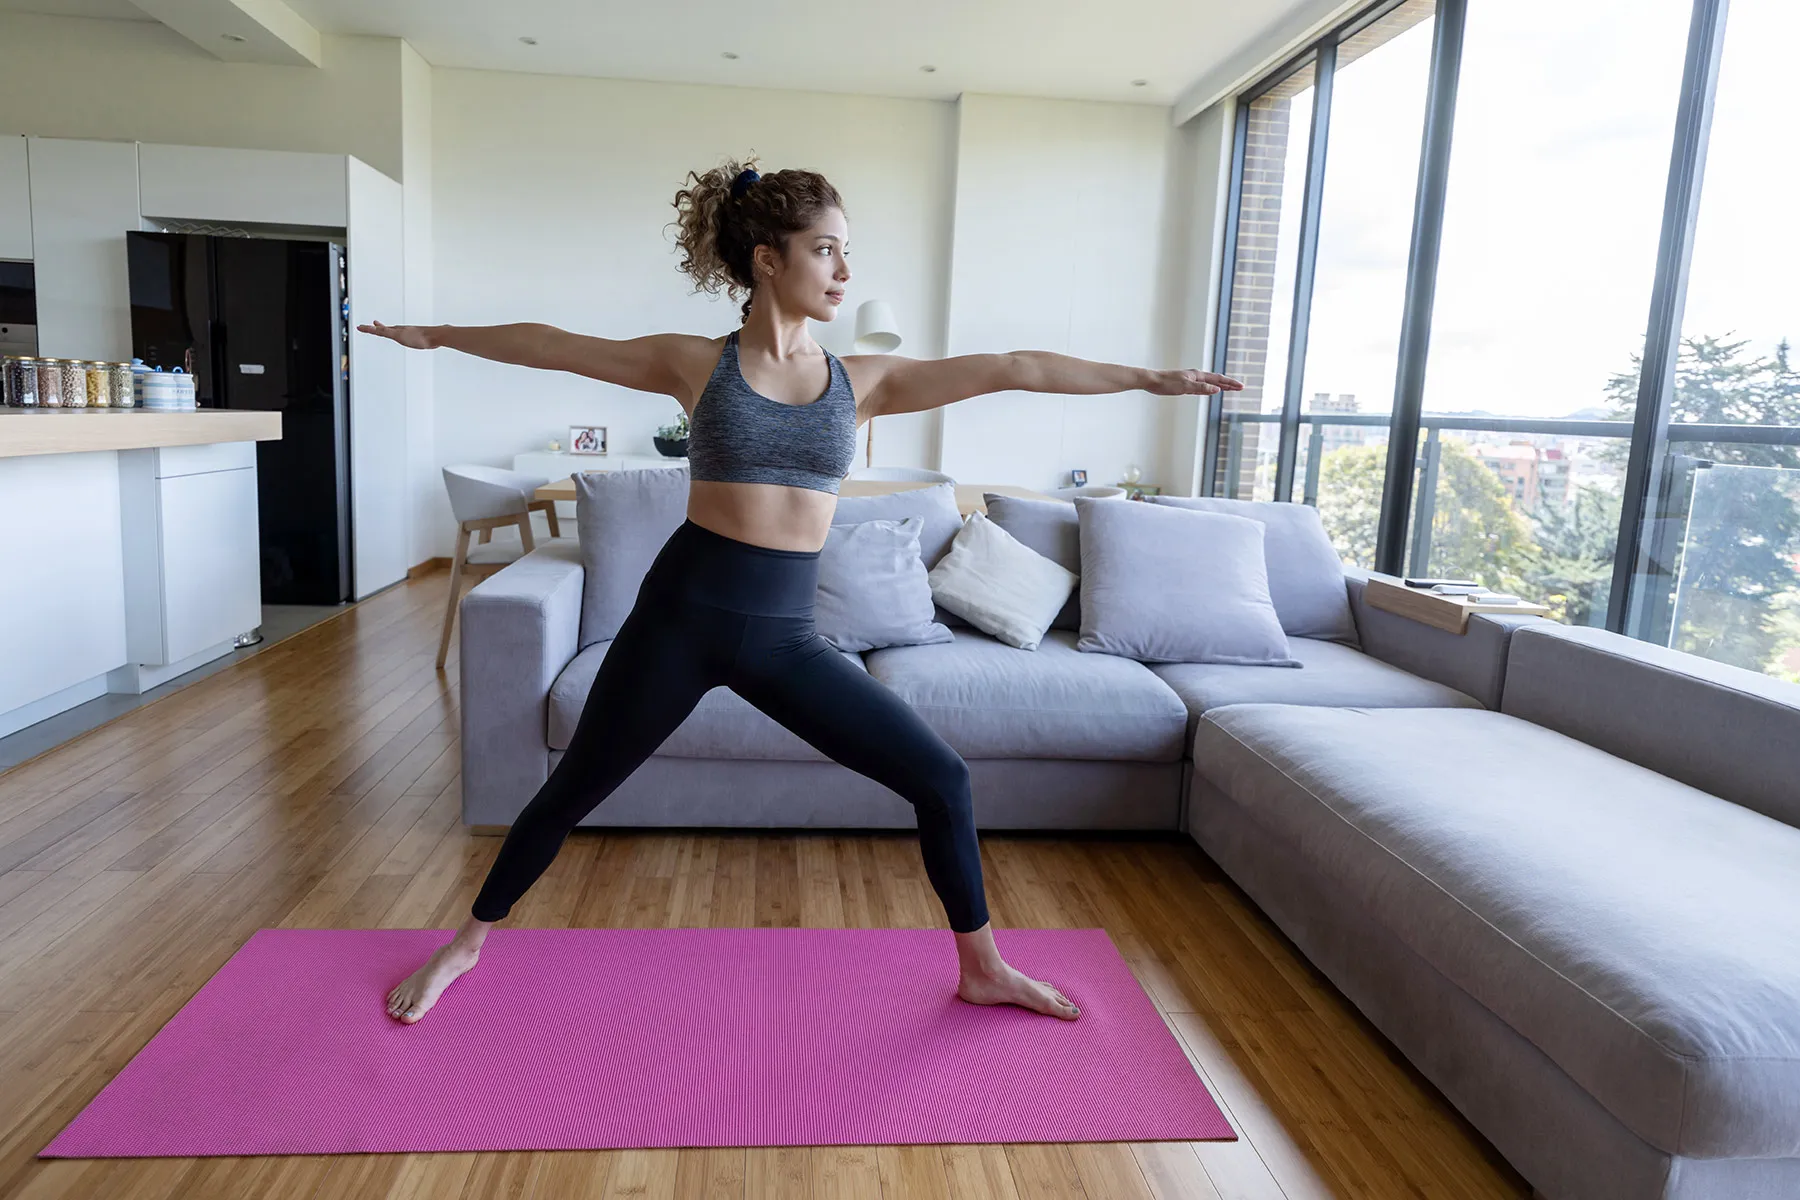 photo of woman doing yoga exercises